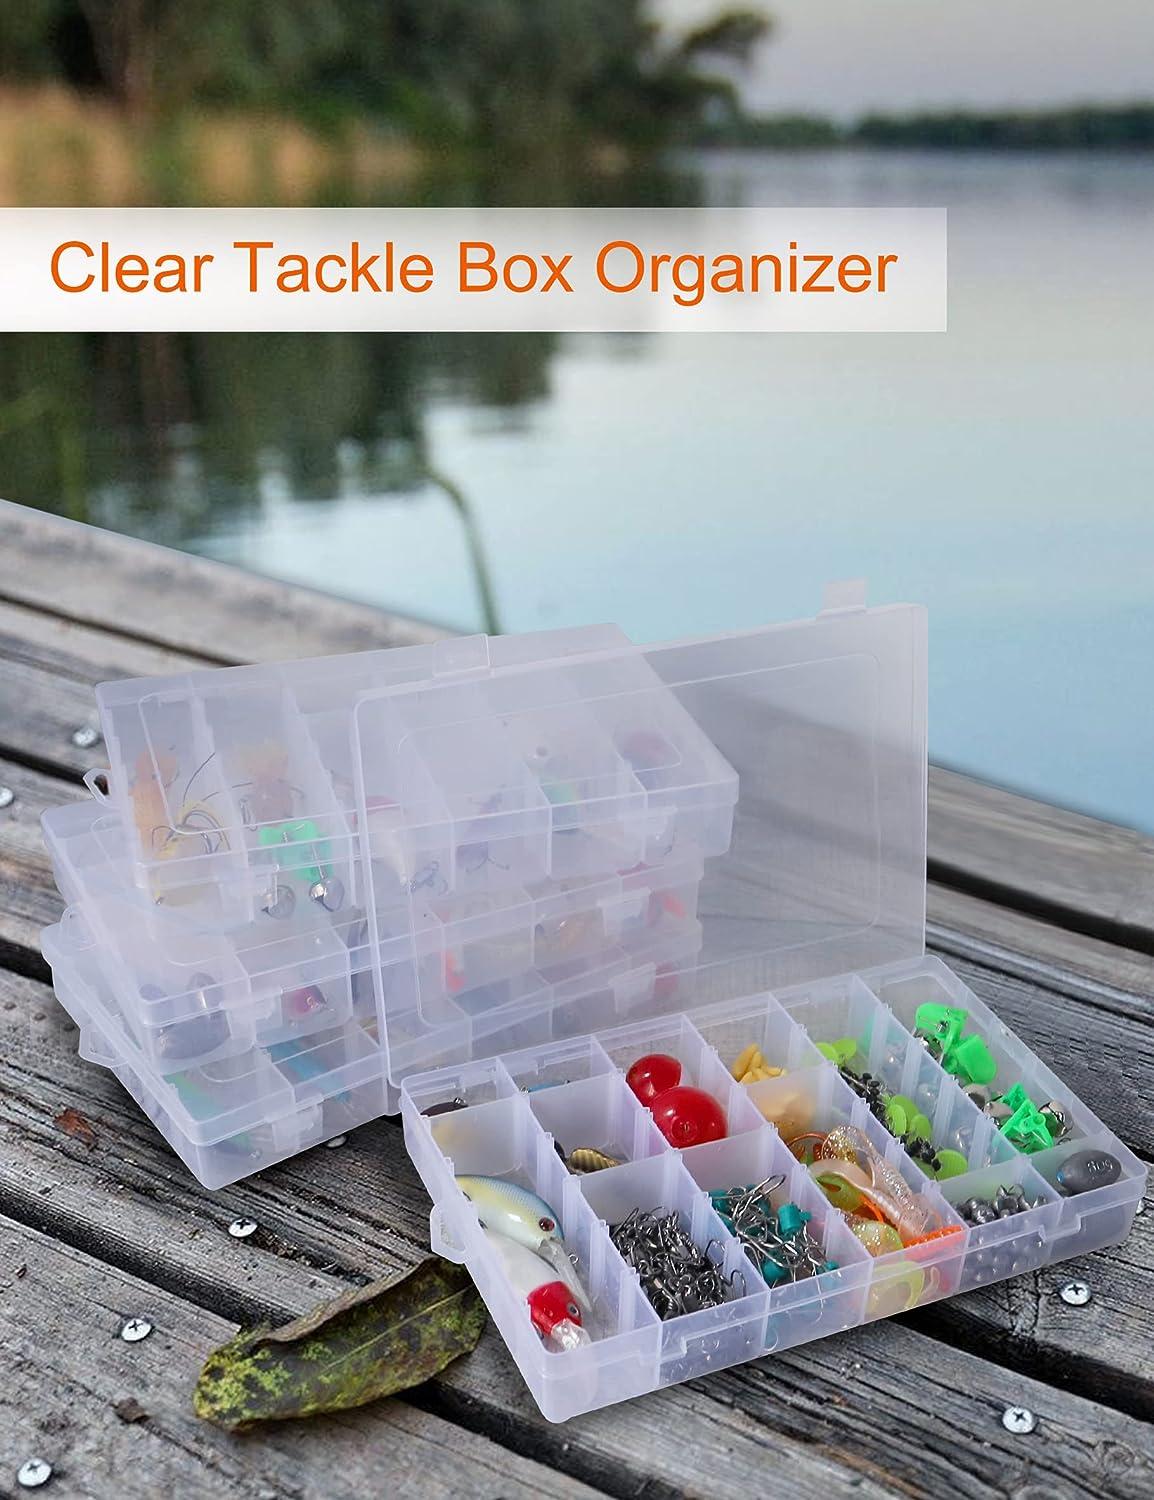 Sjqecyfv Tackle Box Organizer 18 Grids Plastic Craft Box Organizer